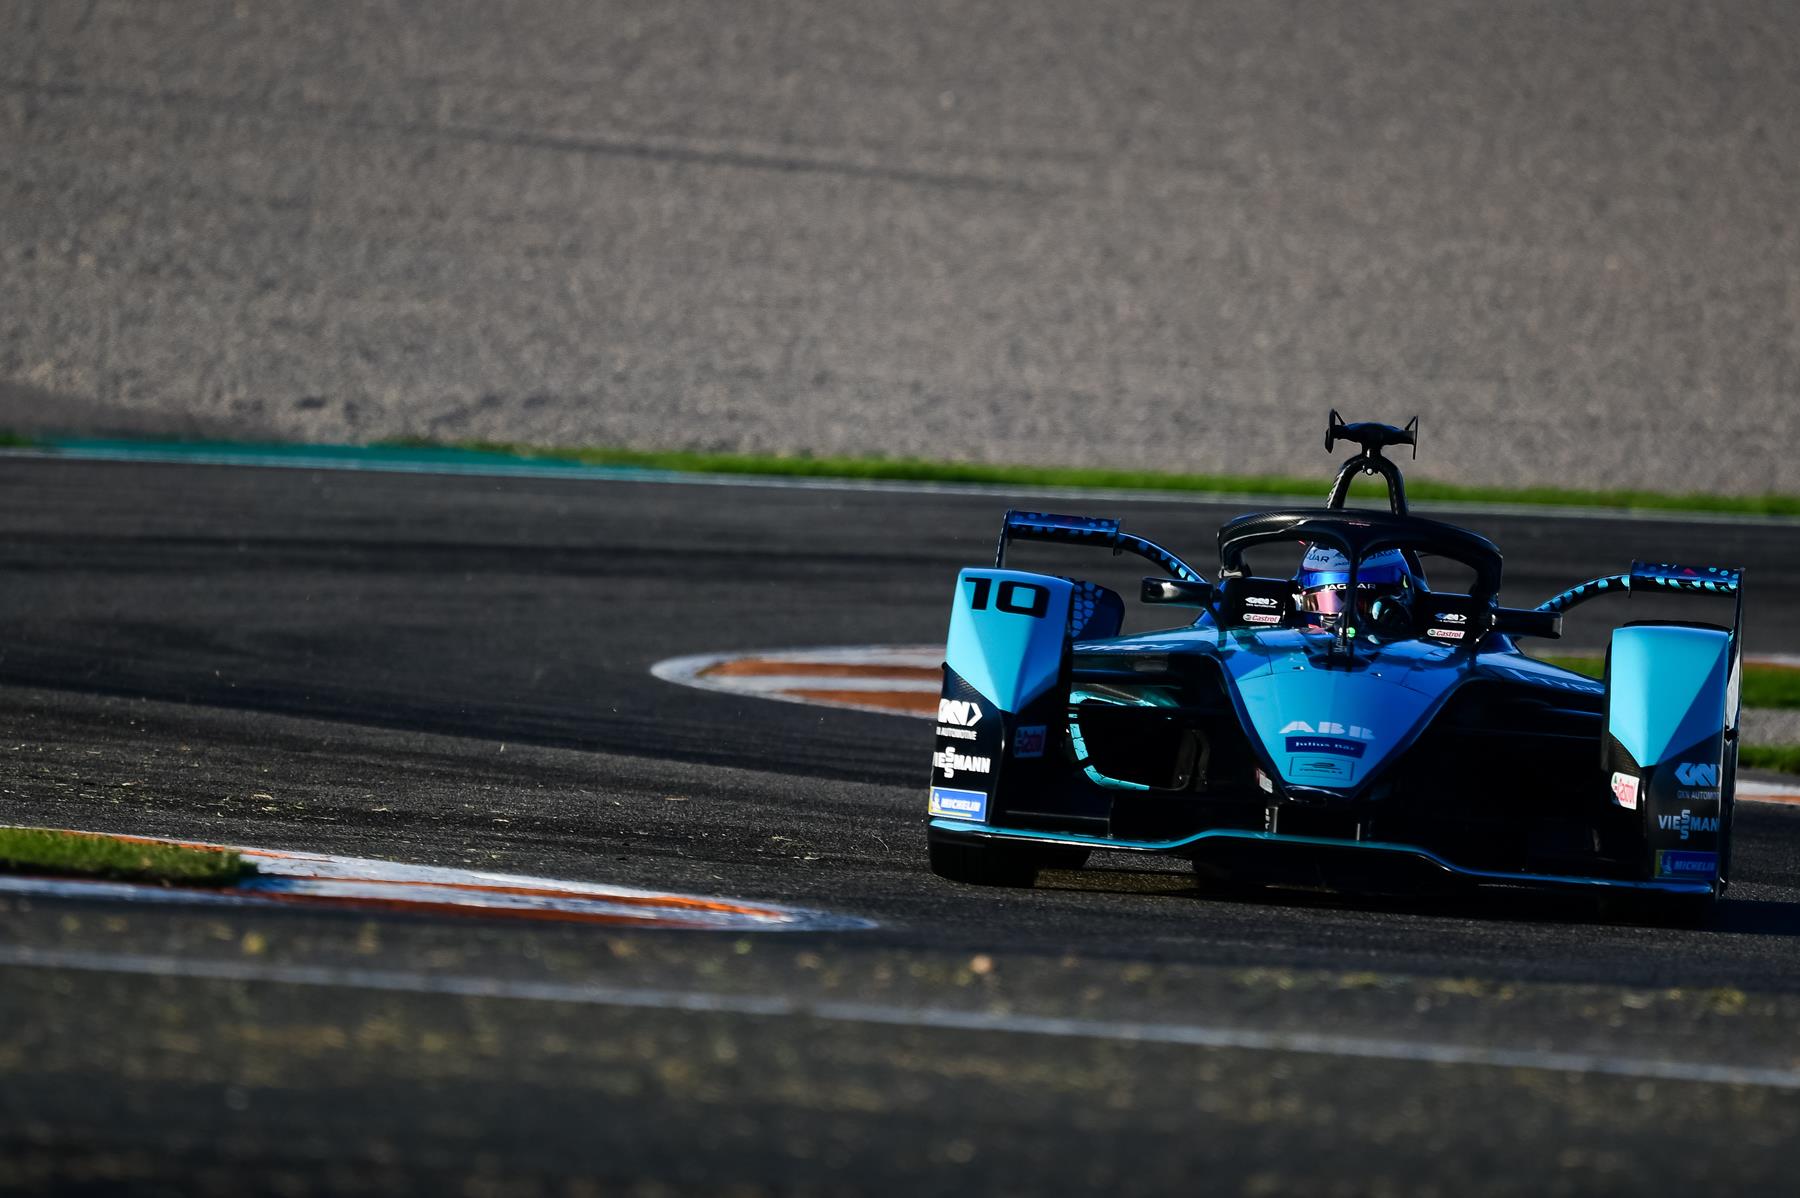 Sam-Bird-Jaguar-Racing-FIA-FormulaE-Valencia-PreSeason-Test-Chicane-front-view